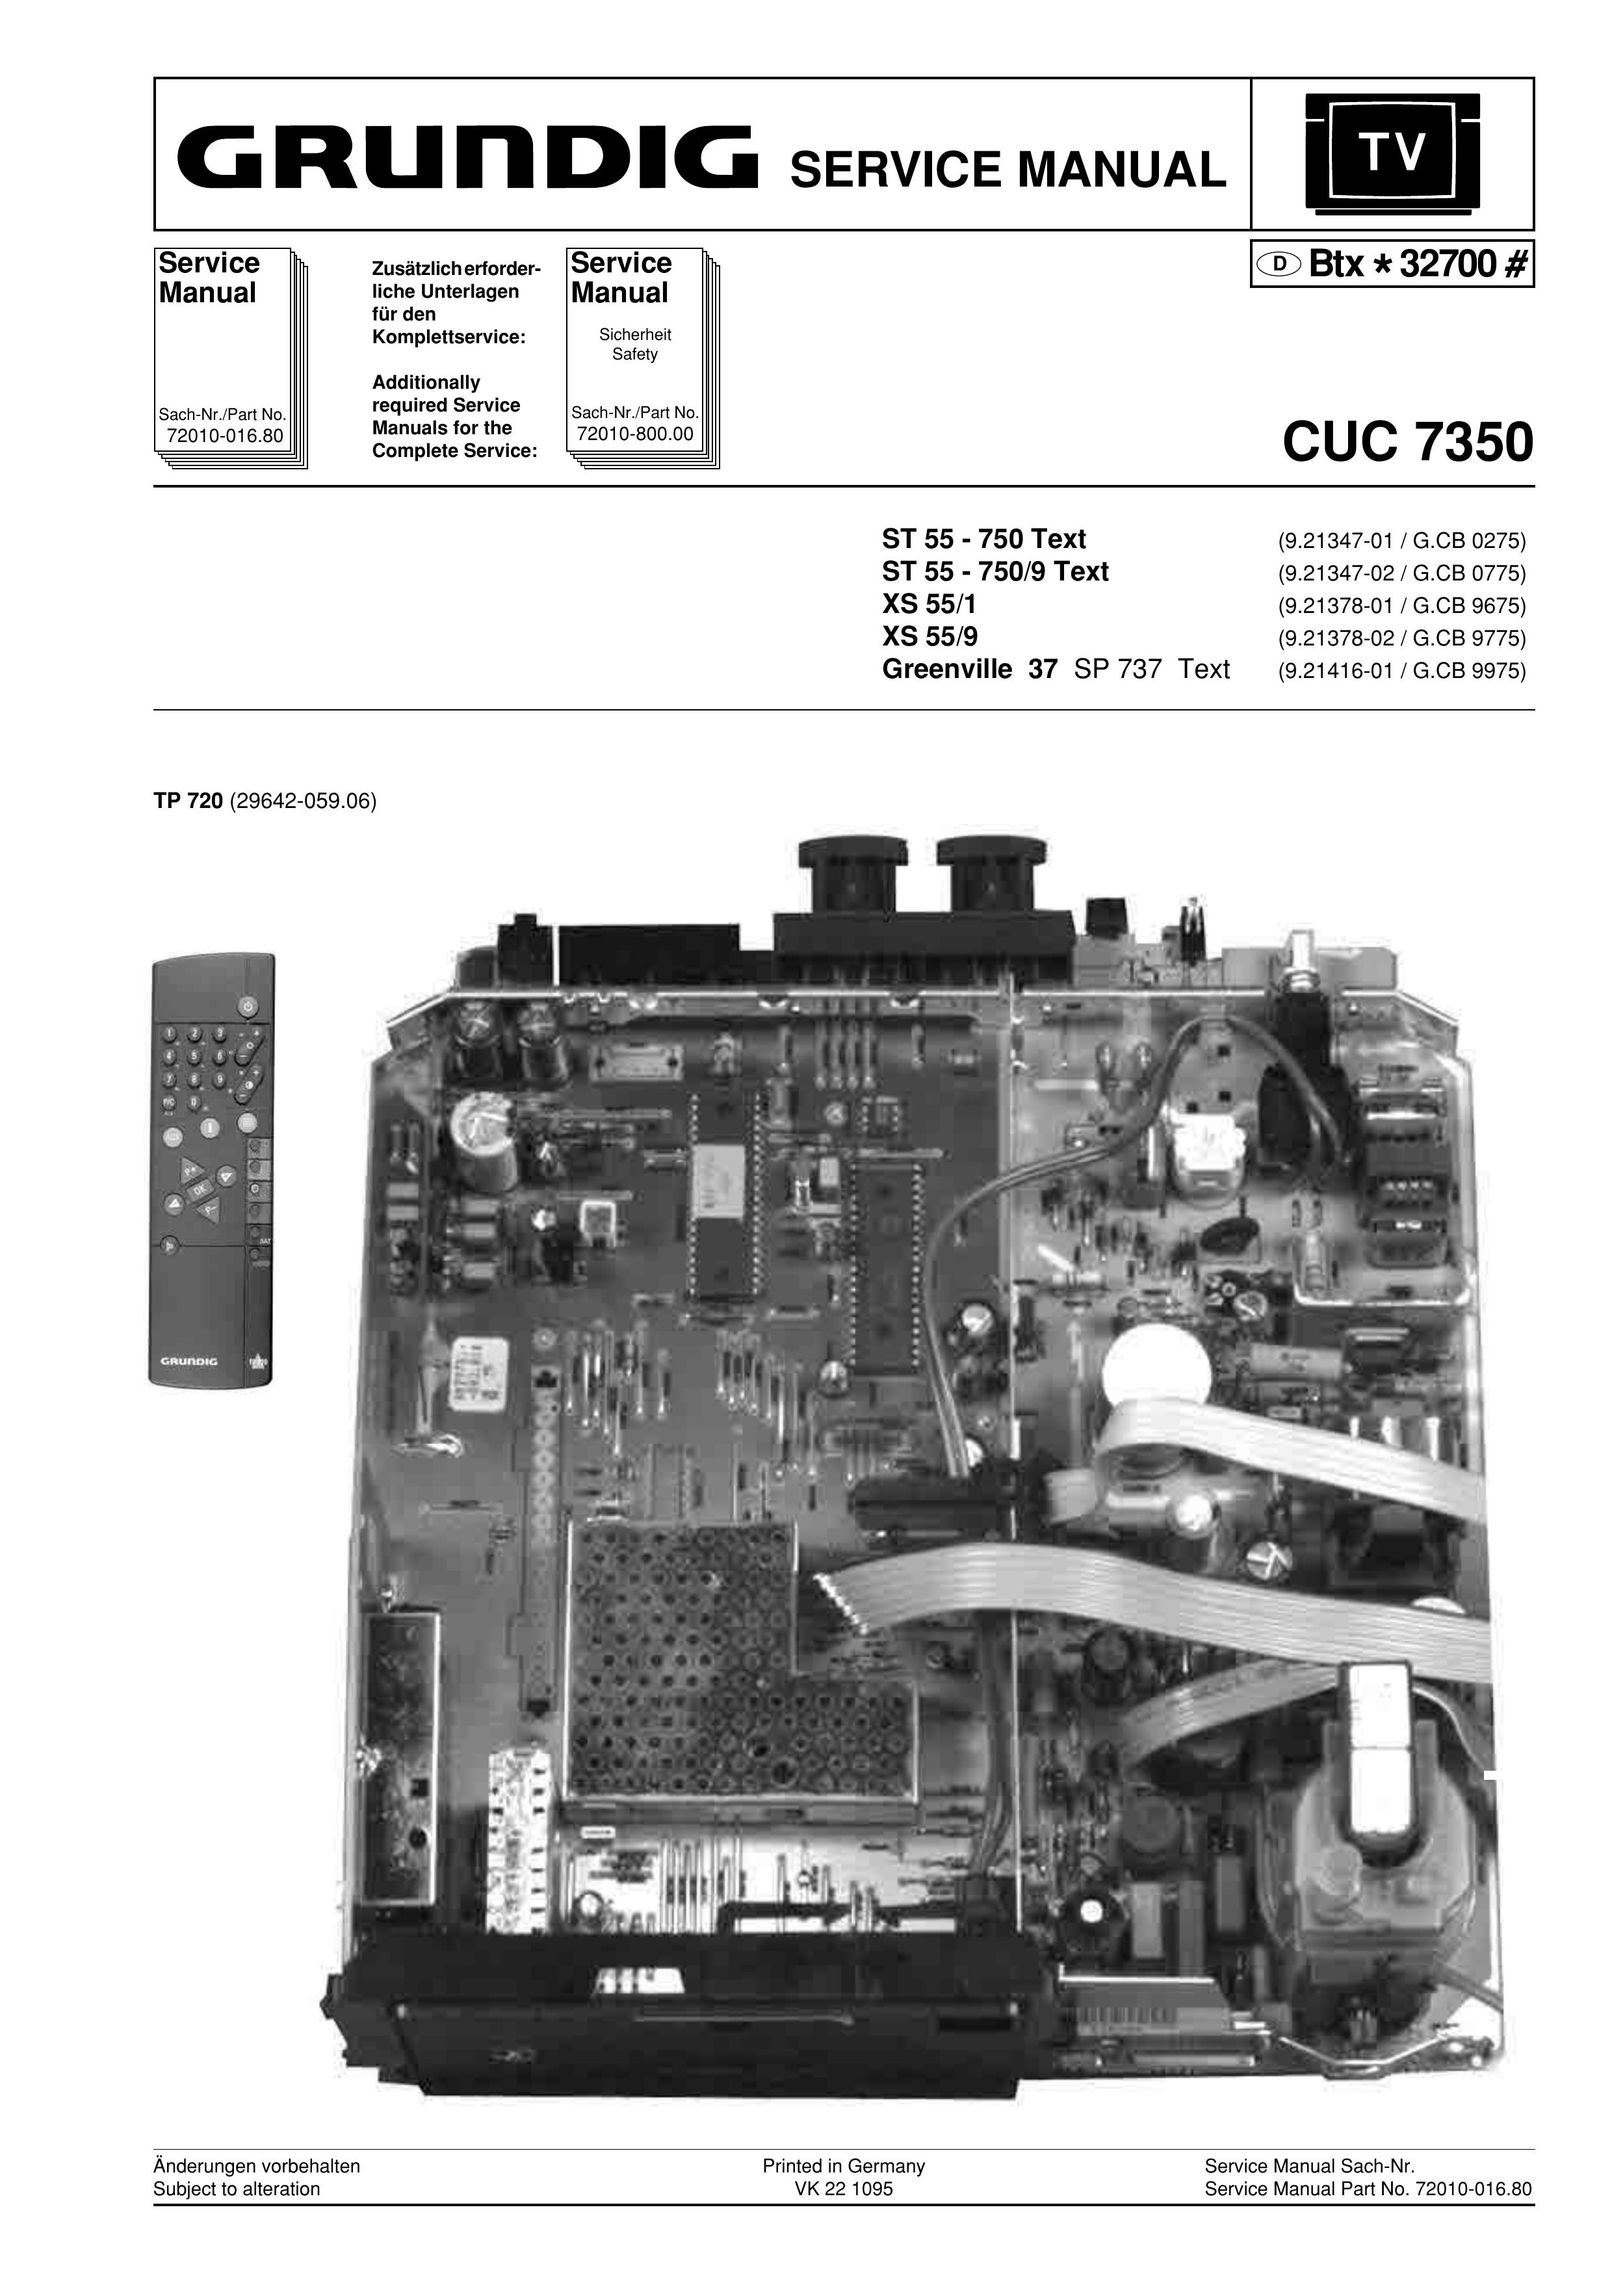 Grundig CUC 7350 Network Card User Manual